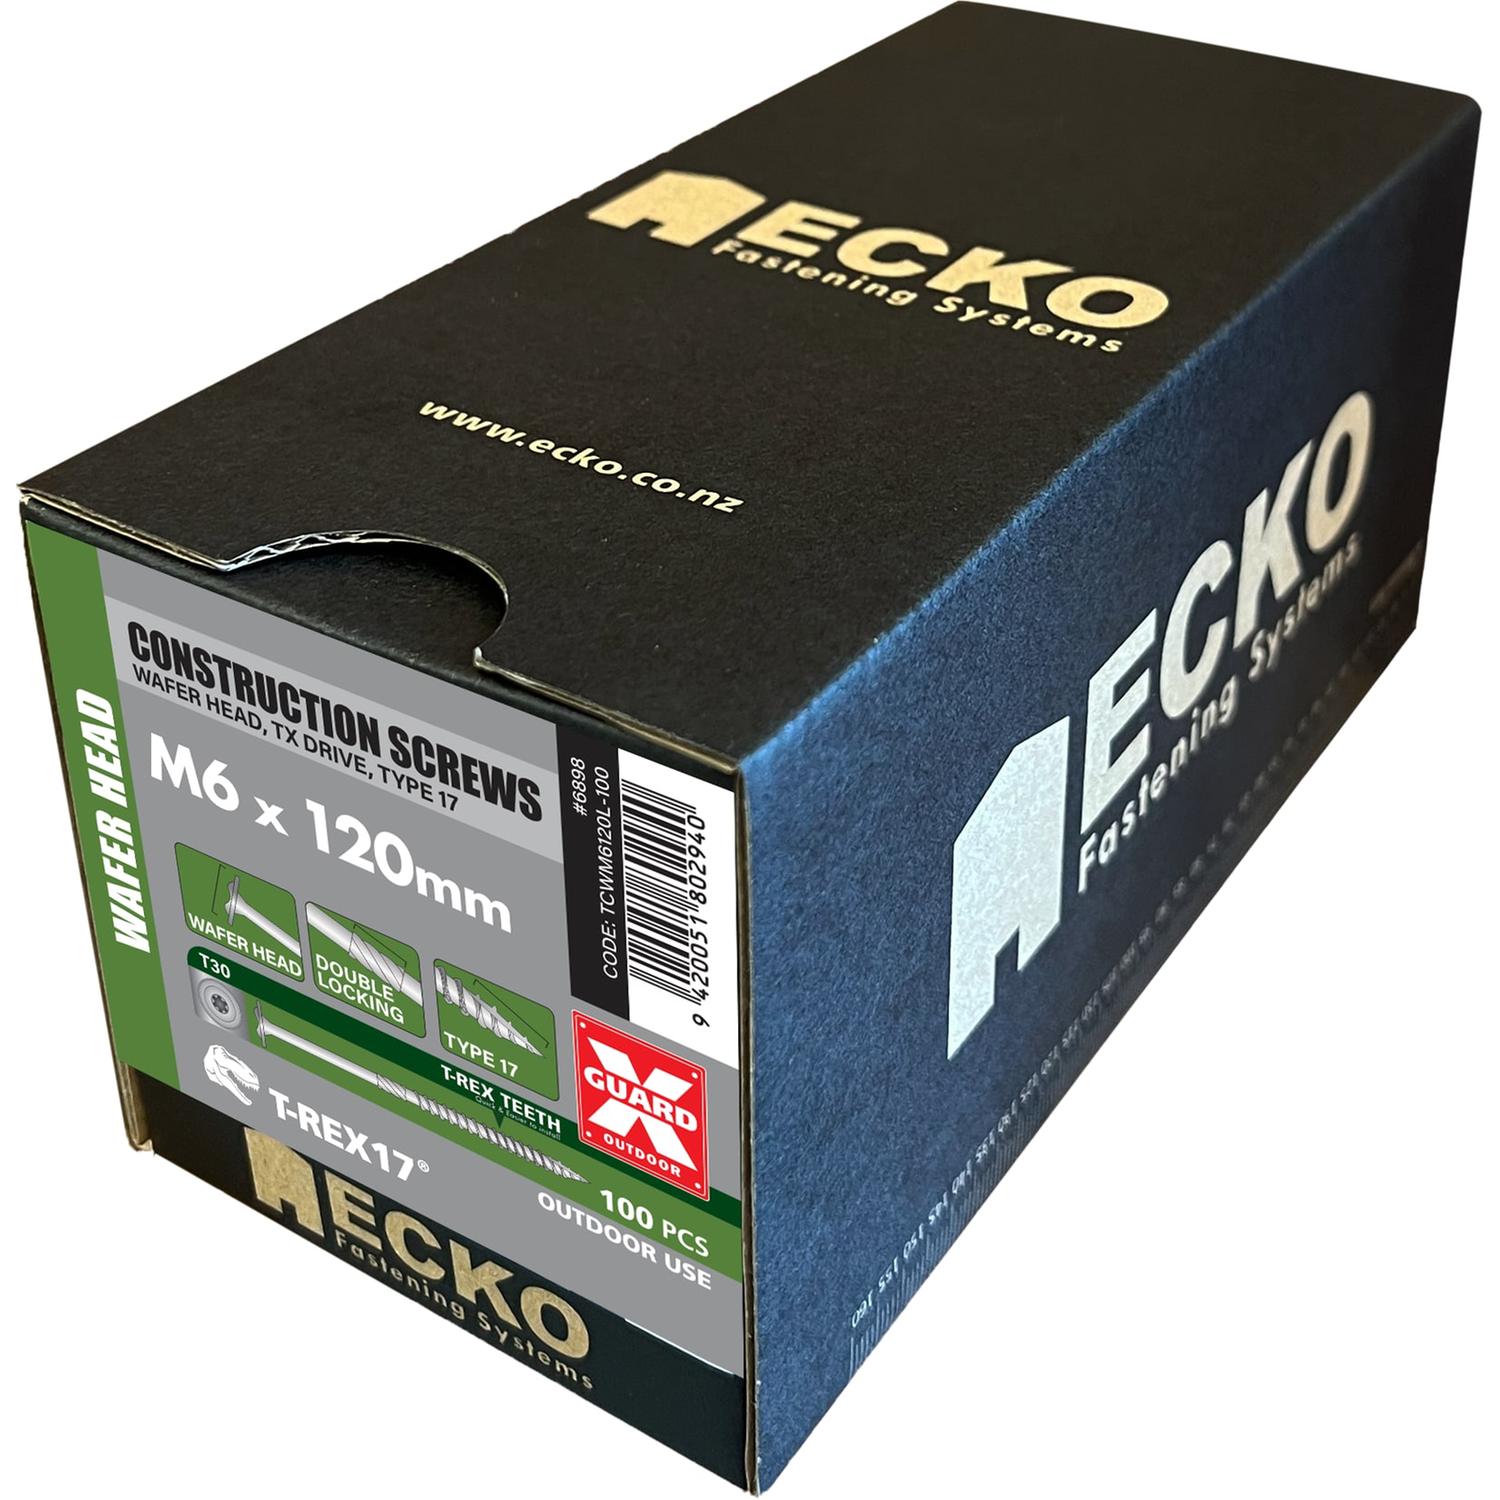 Ecko T-Rex17 Wafer Head Construction Screws M6 X 120Mm (500 Pack)